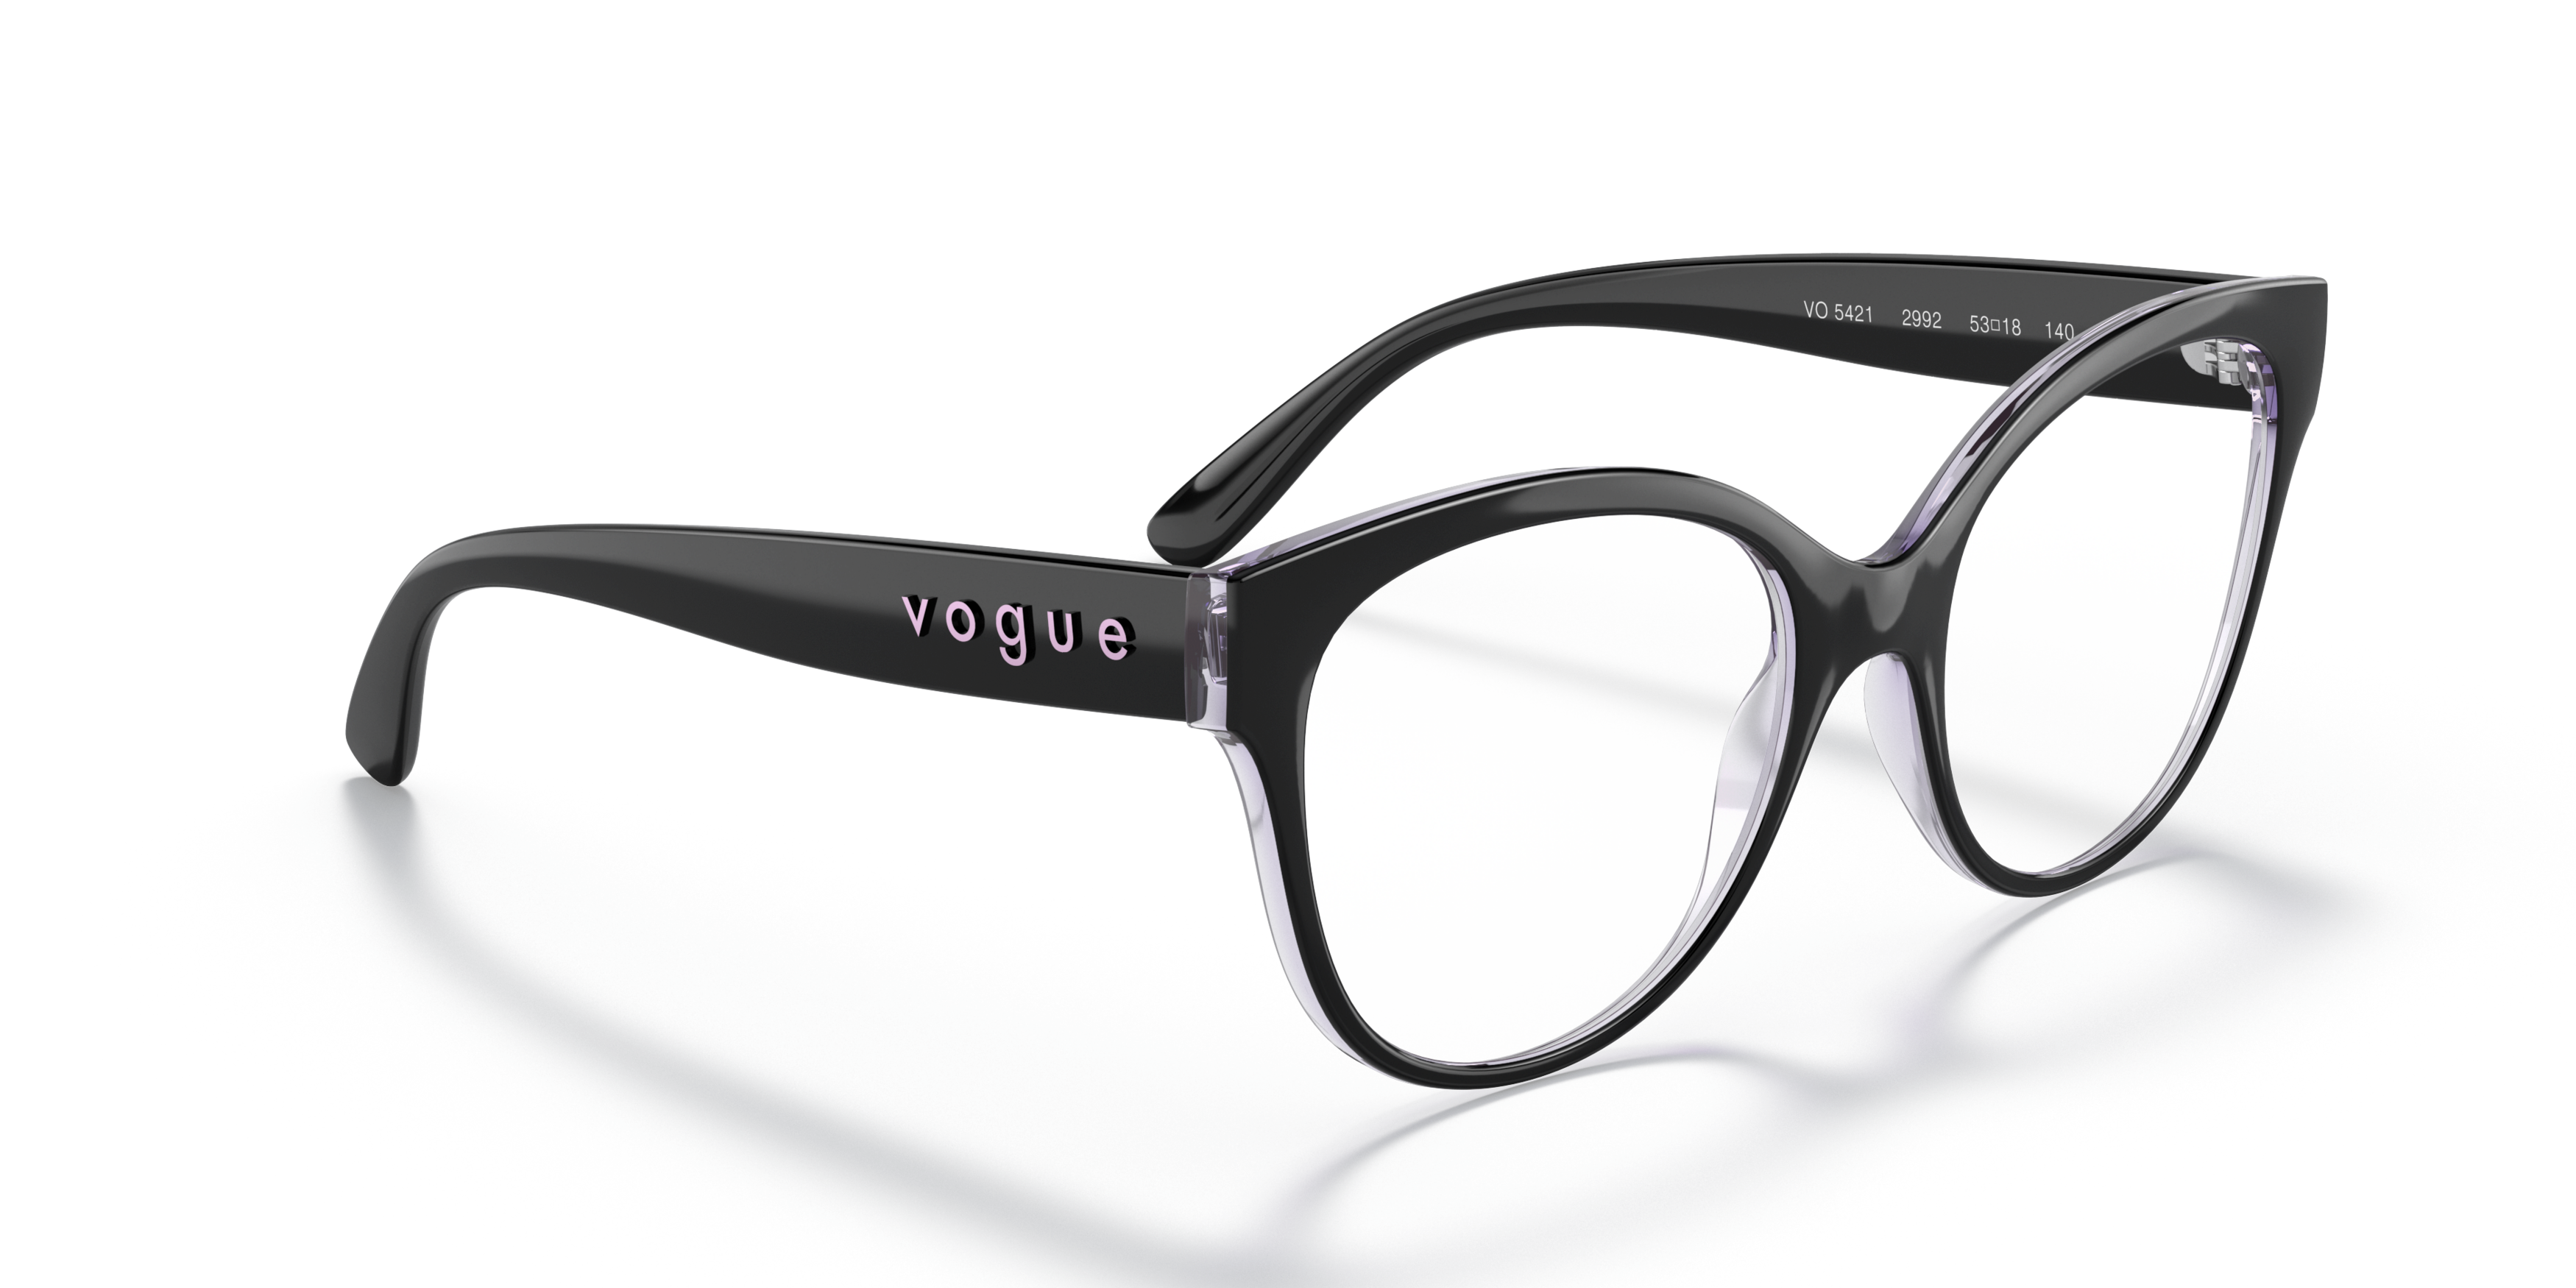 Angle_Right01 Vogue VO 5421 (2992) Glasses Transparent / Black